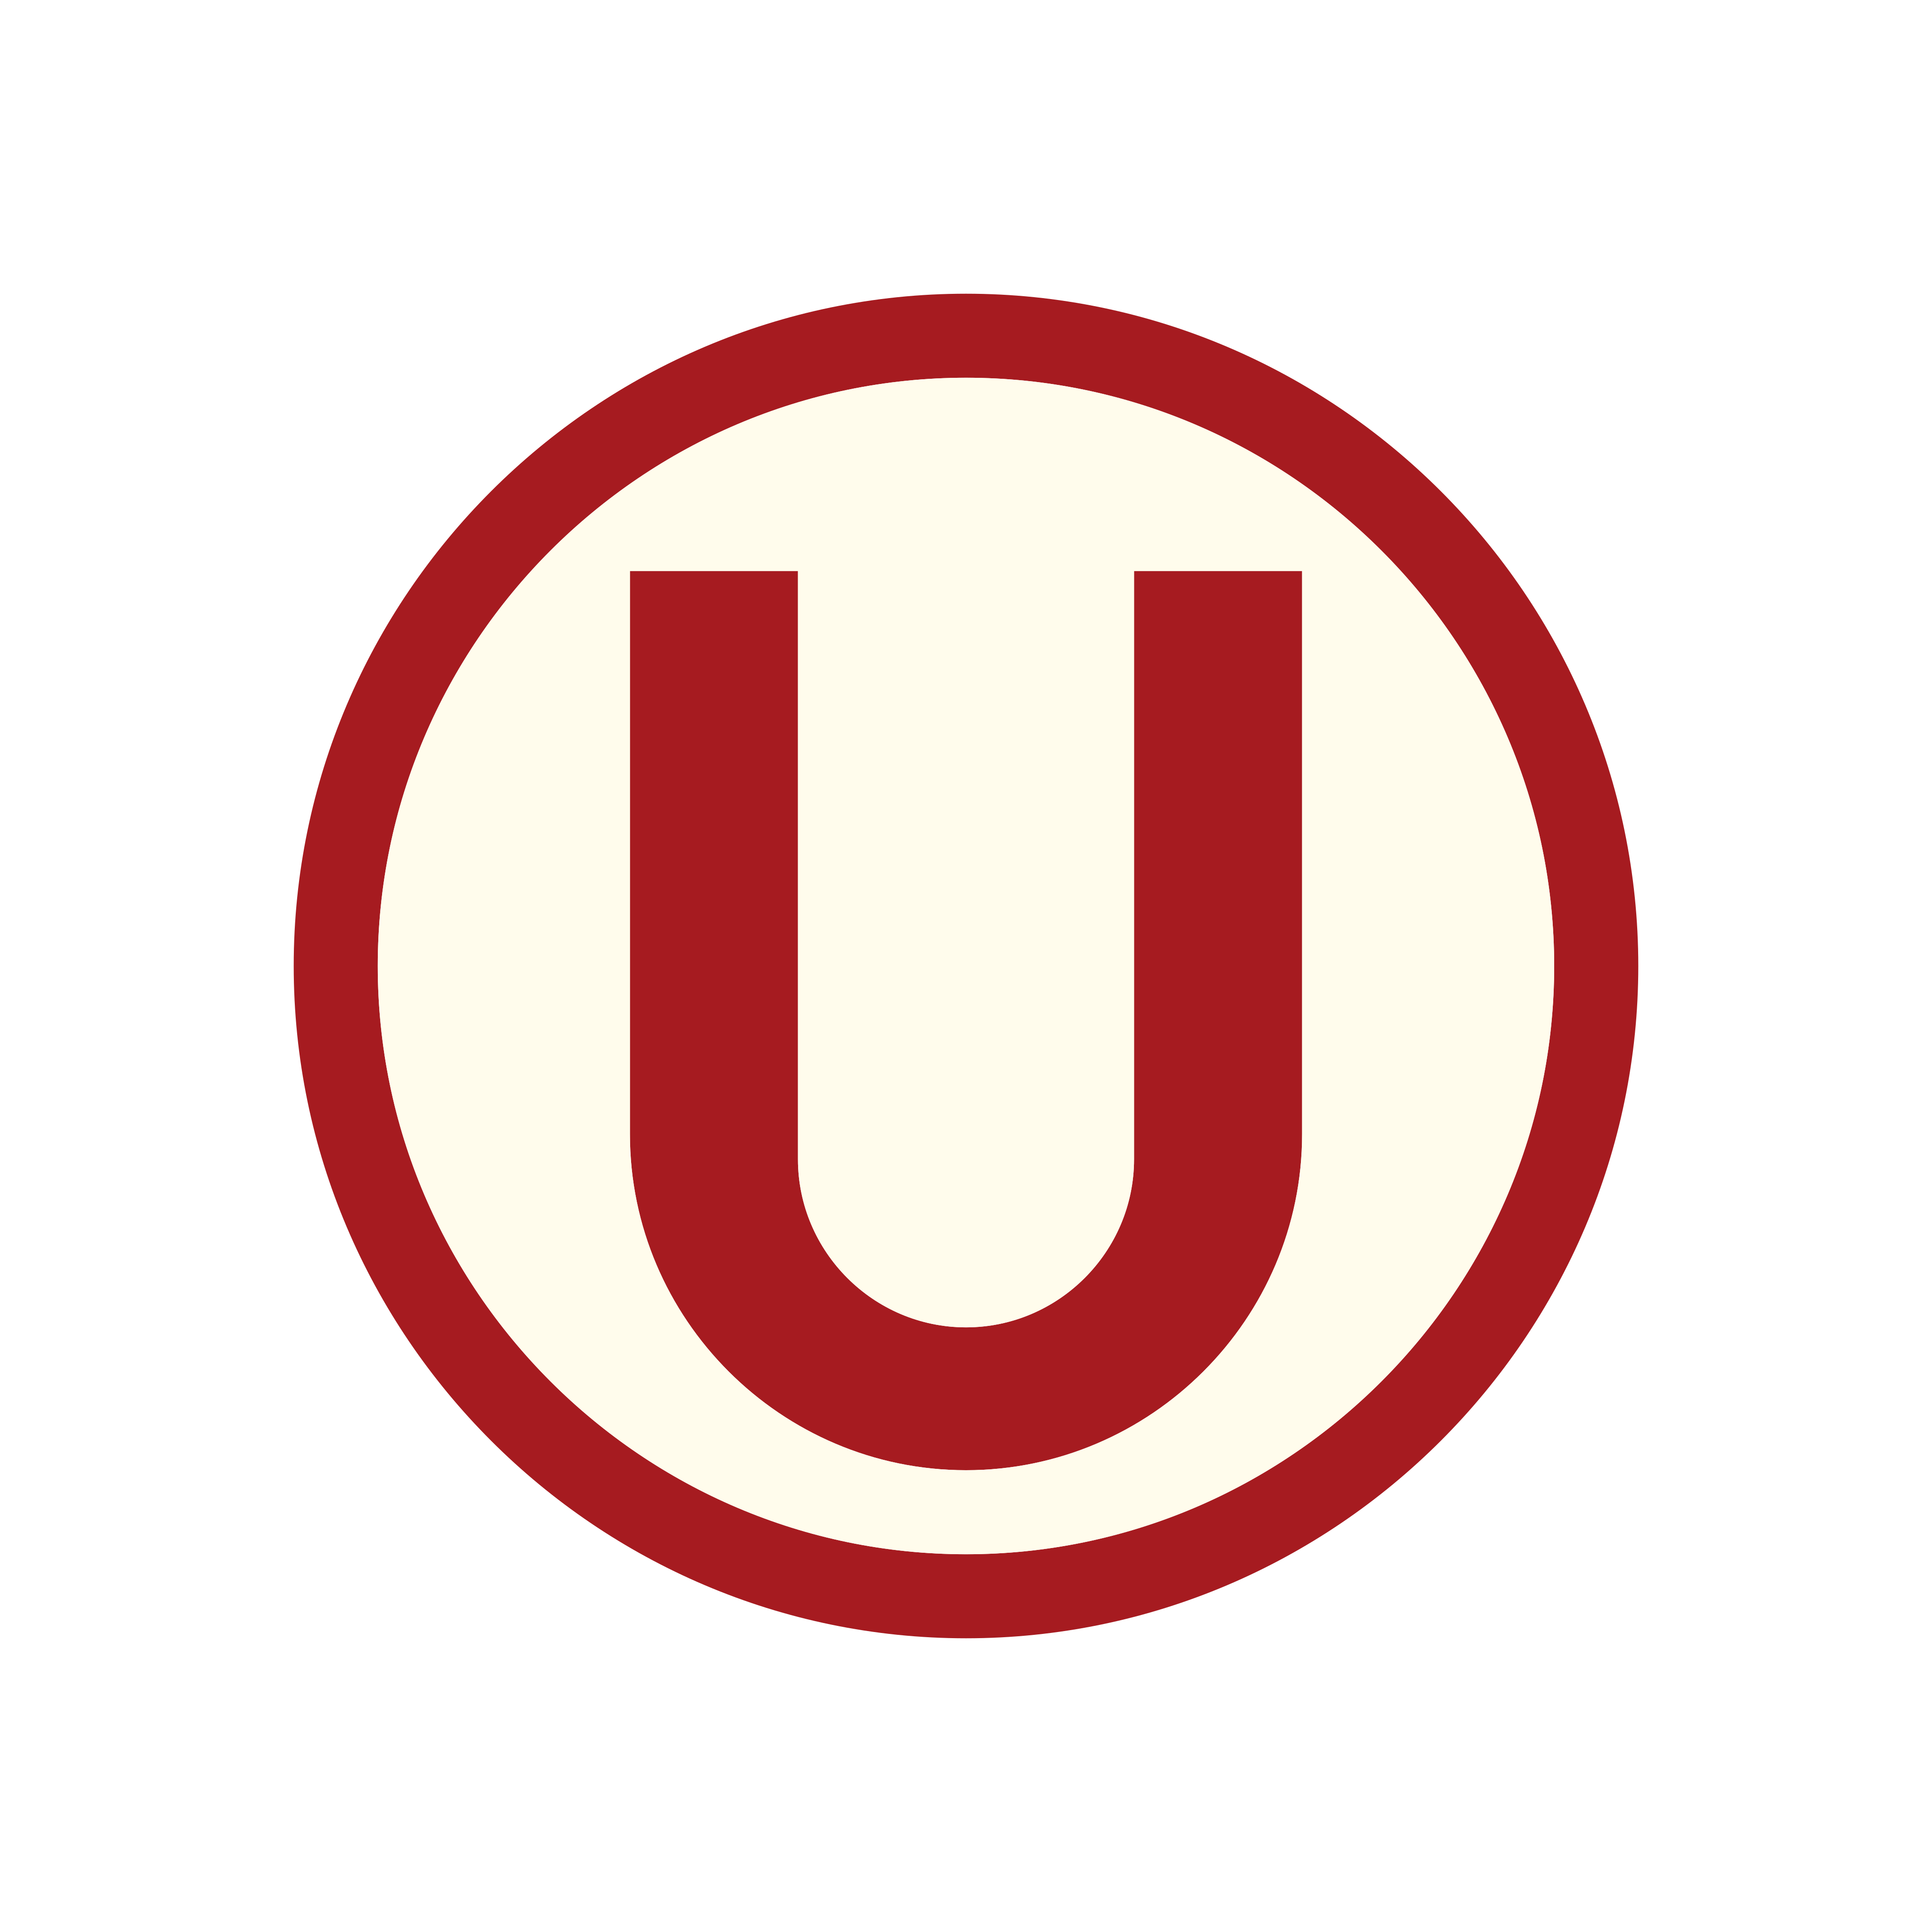 universitario fc logo escudo 0 - Universitario Logo